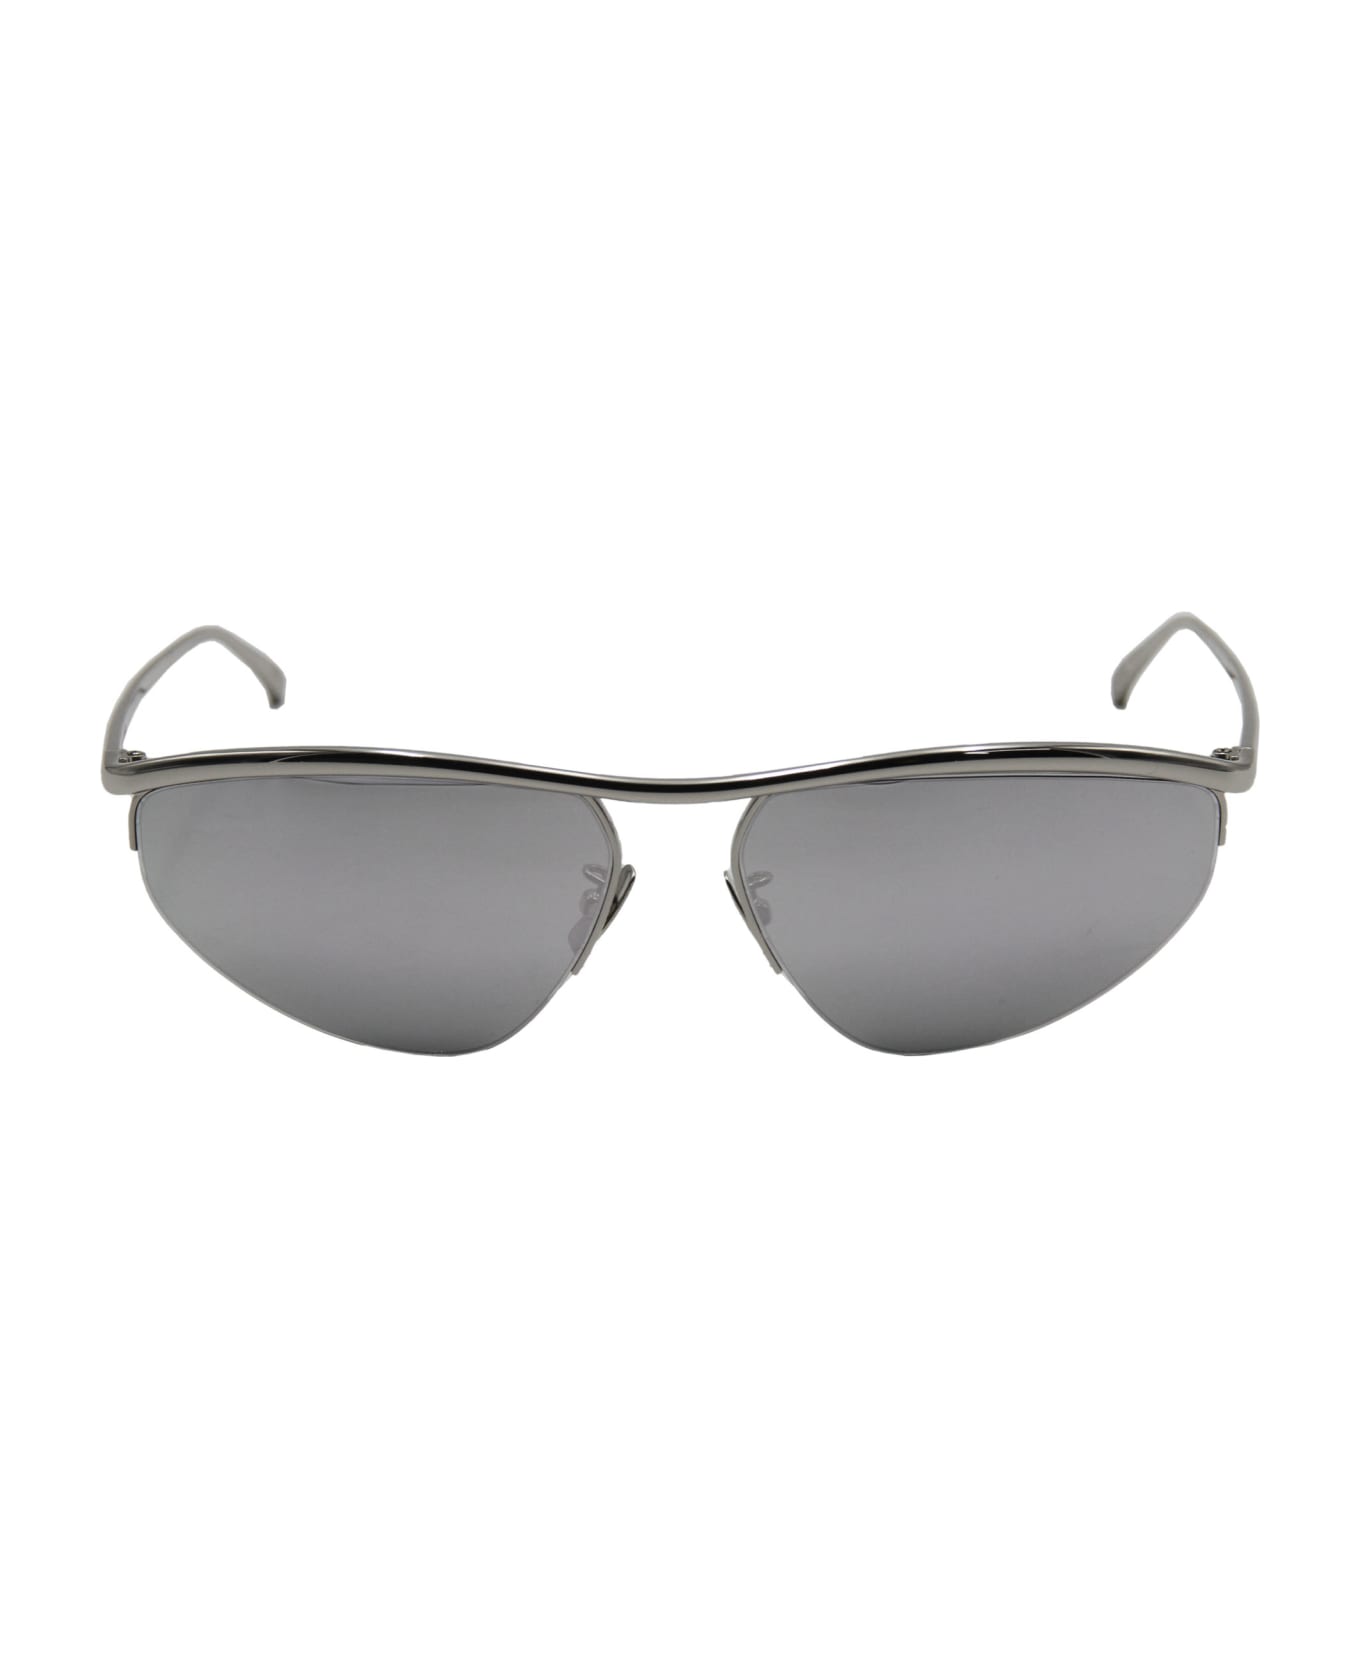 Bottega Veneta Eyewear Half Frame Sunglasses - silver